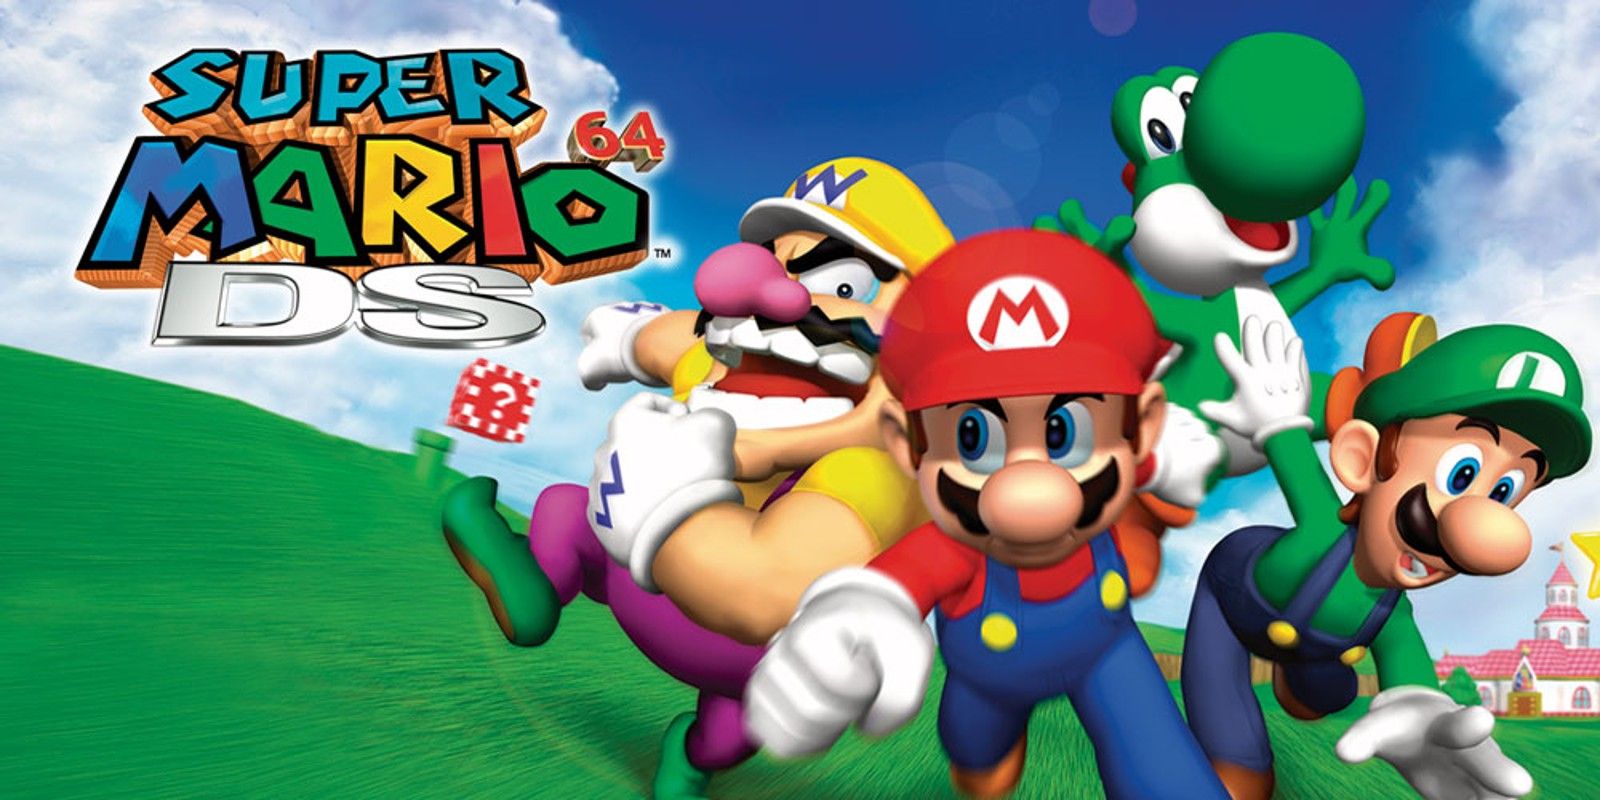 Super Mario 64 DS has a lot of bonus content